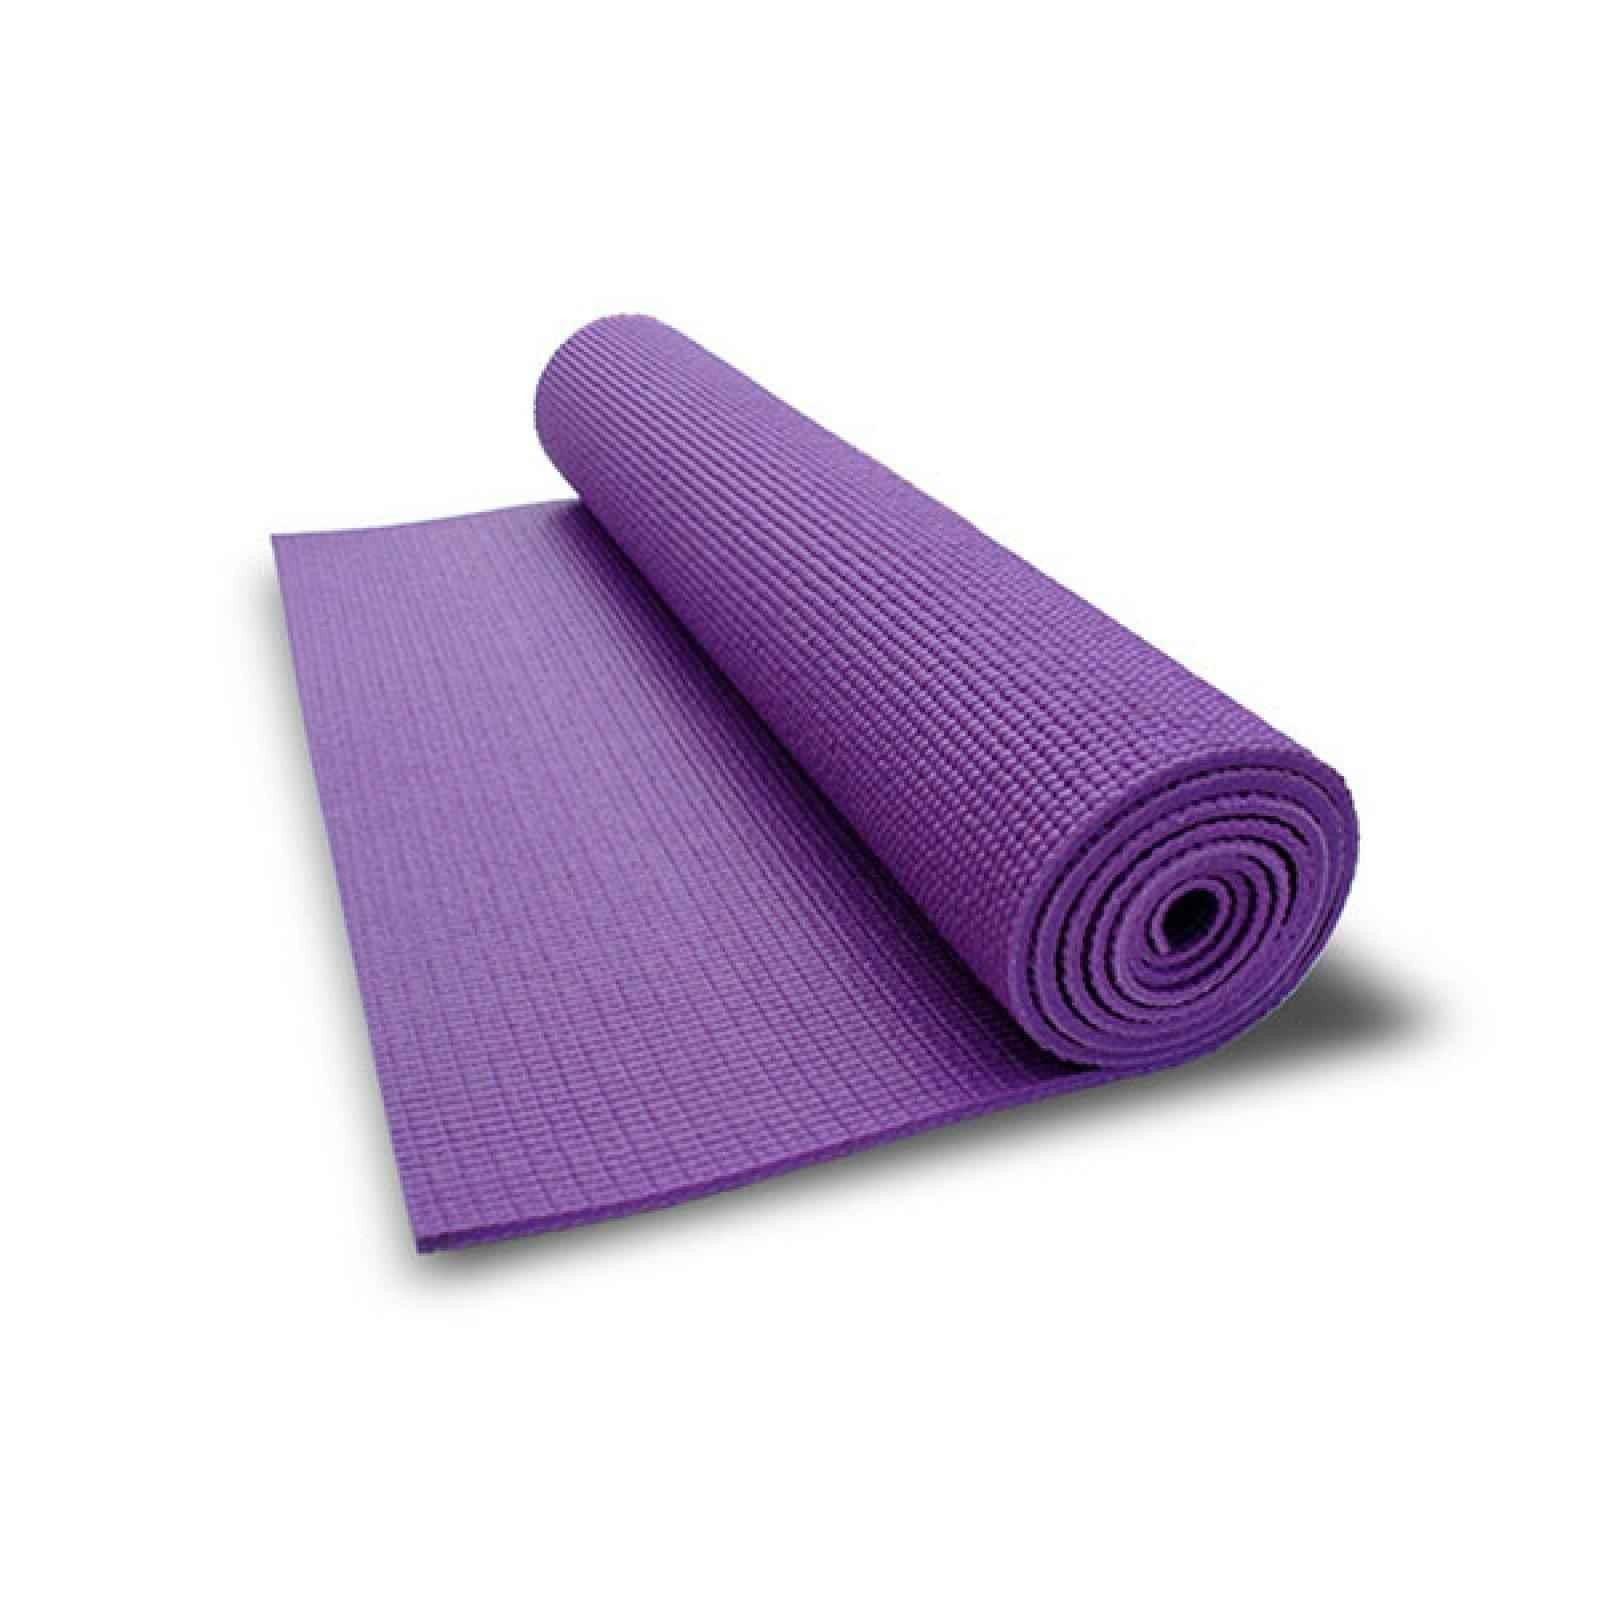 yoga mat images